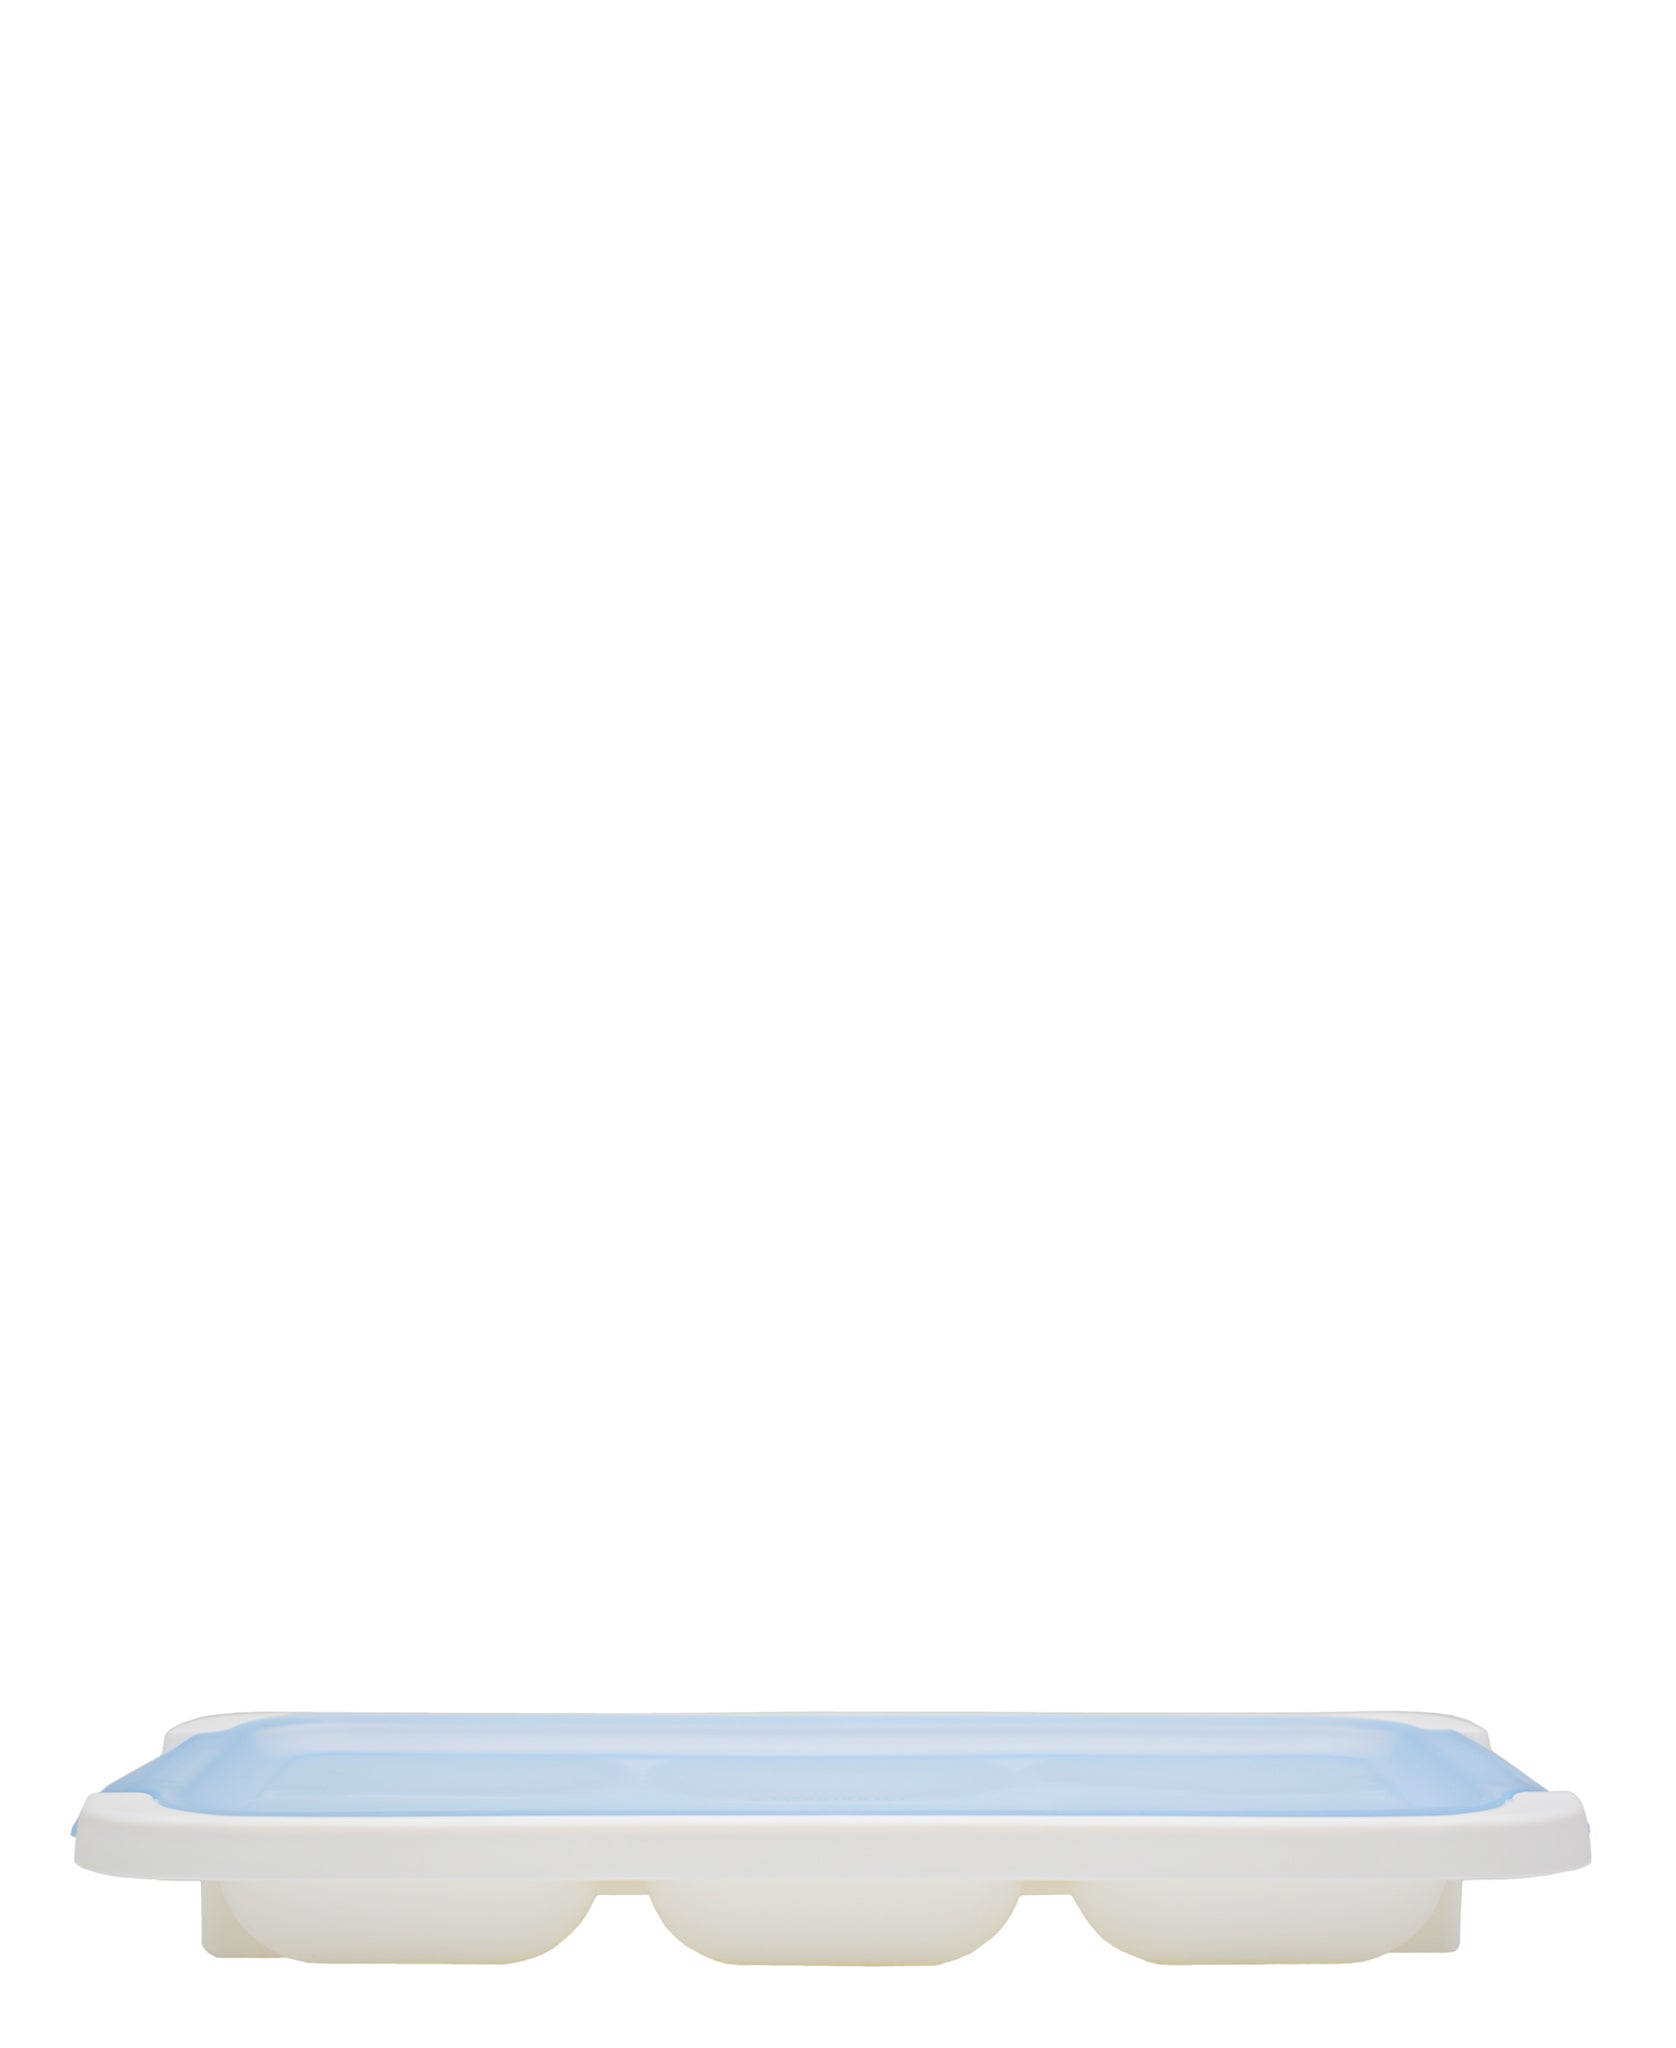 Progressive 1/2 Cup Freezer Portion Pod - White & Blue